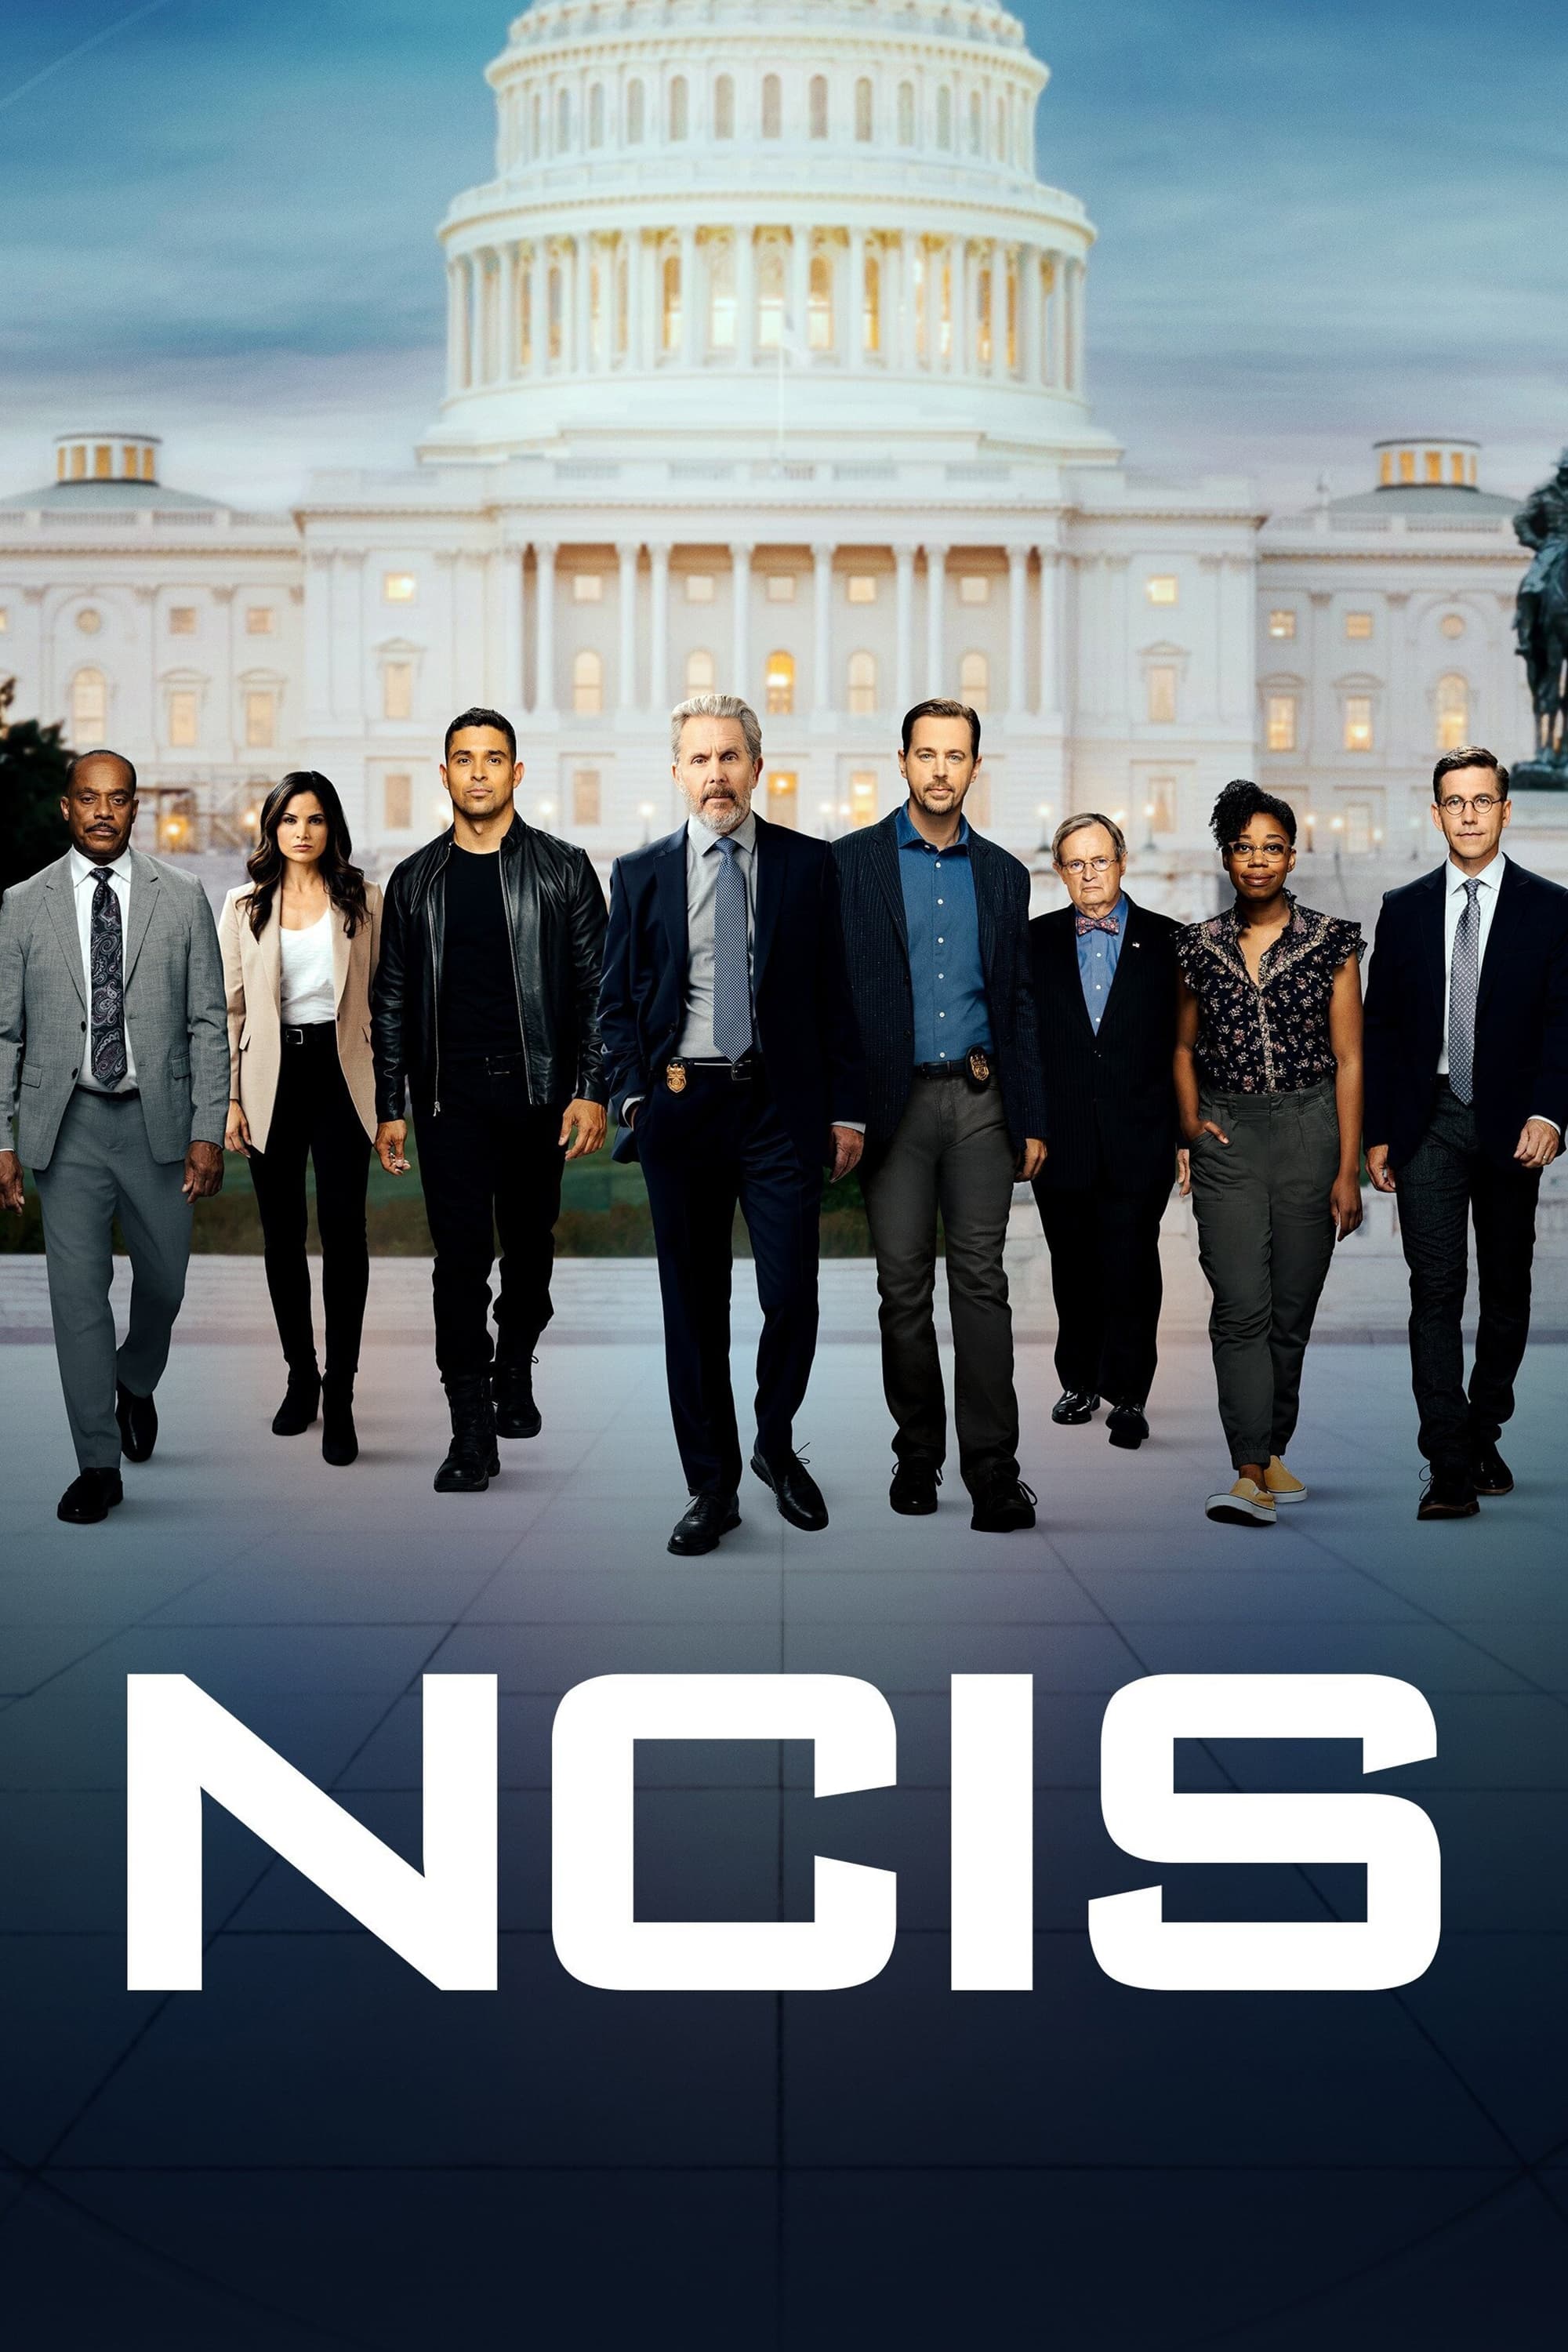 NCIS TV Shows About Interrogation